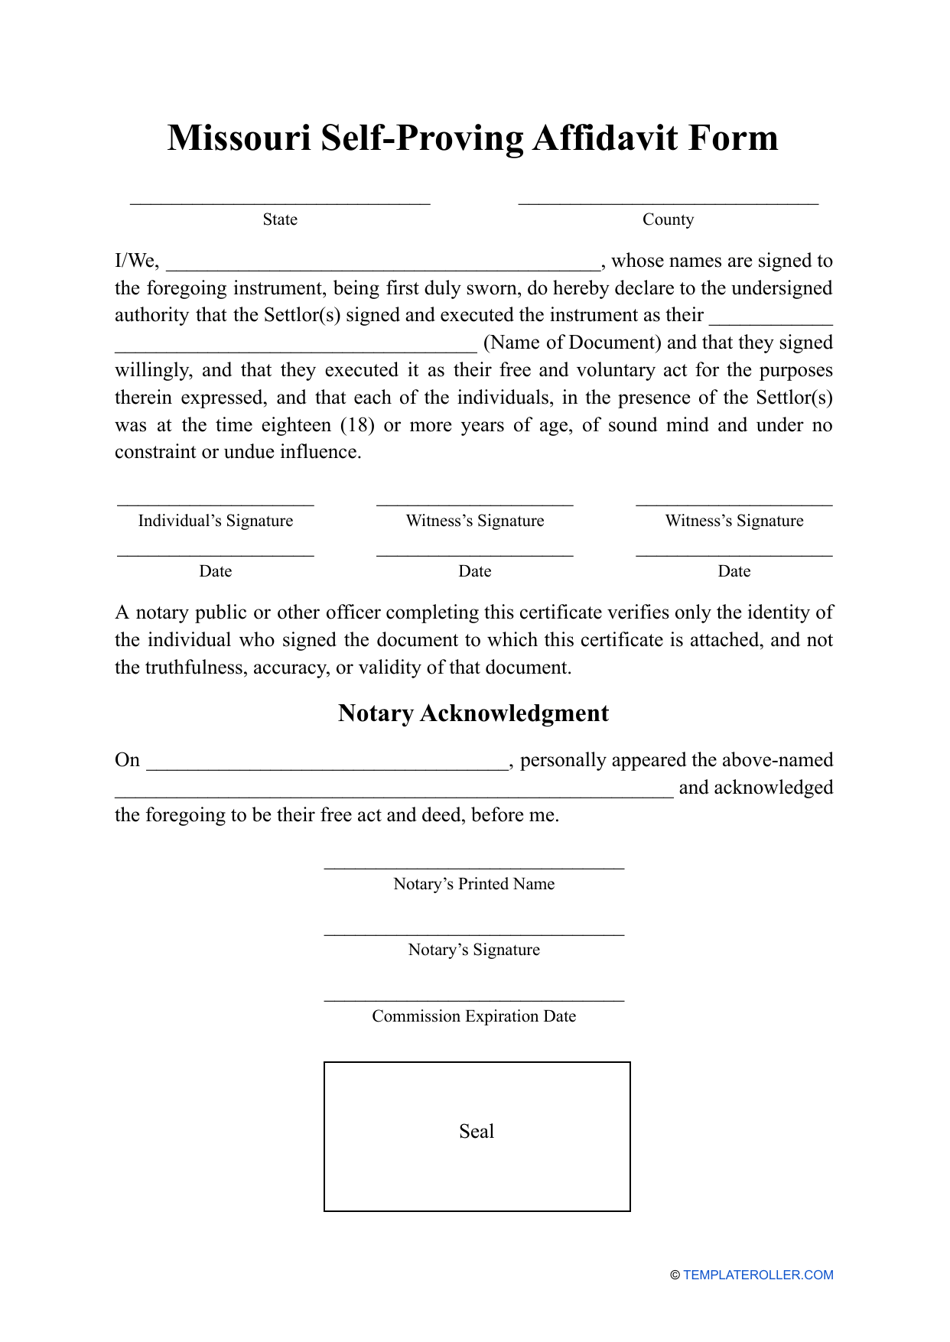 Self-proving Affidavit Form - Missouri, Page 1